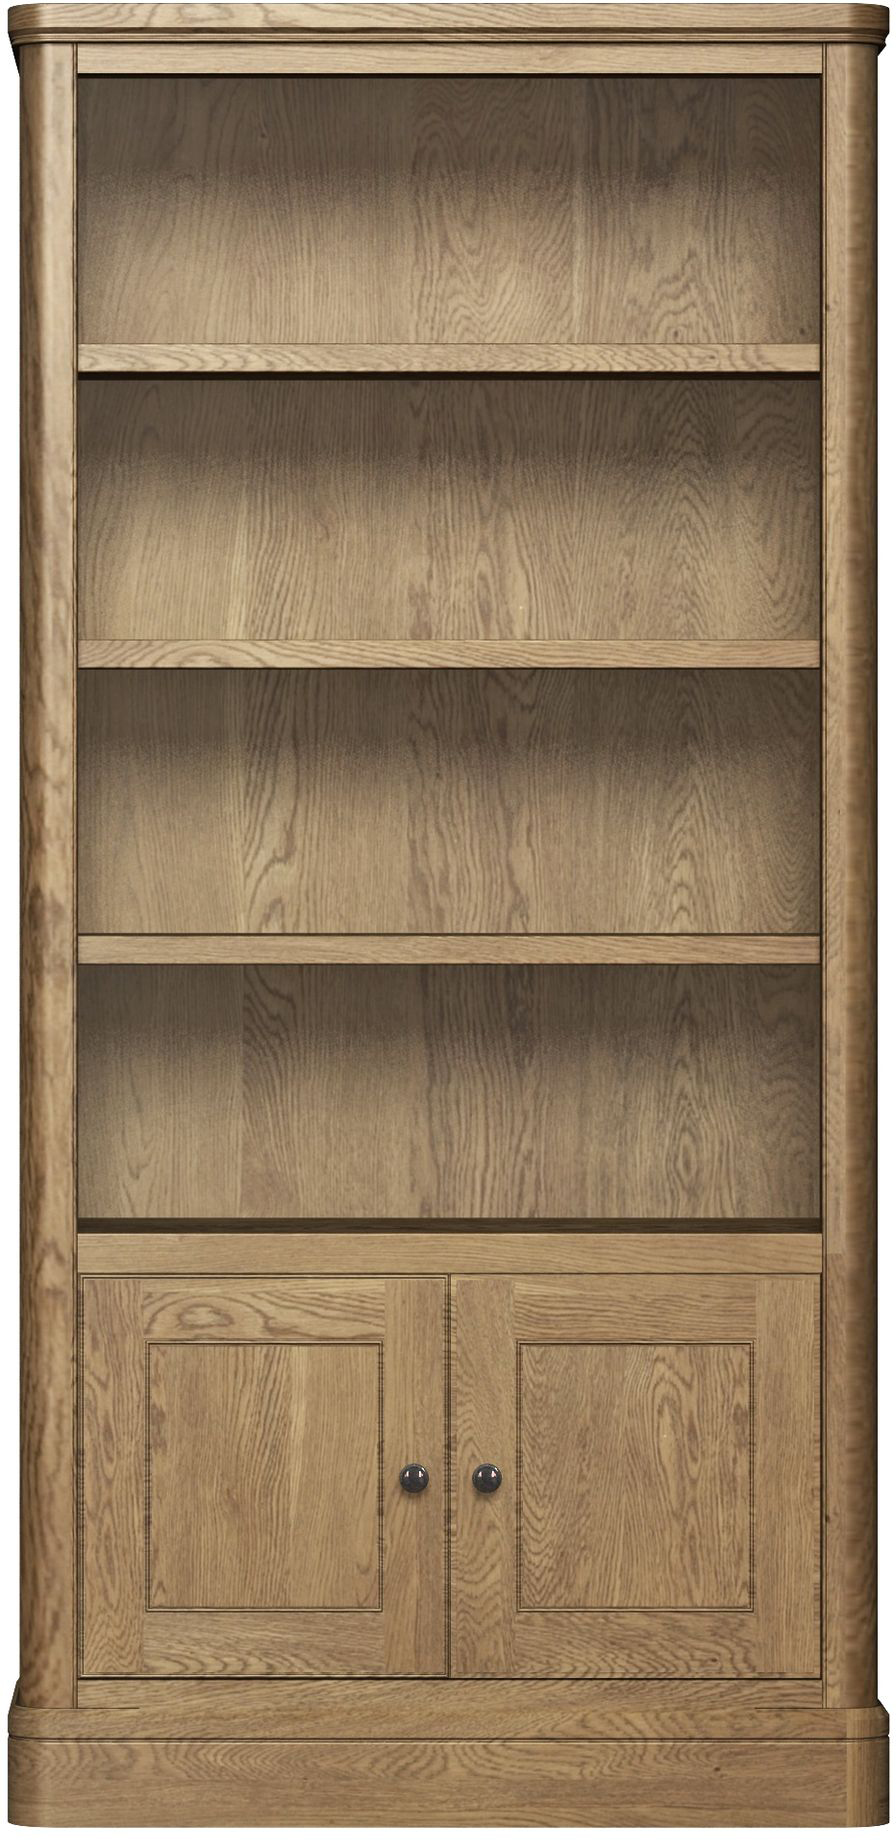 Carlton Furniture - Copeland Tall Bookcase with Cupboard